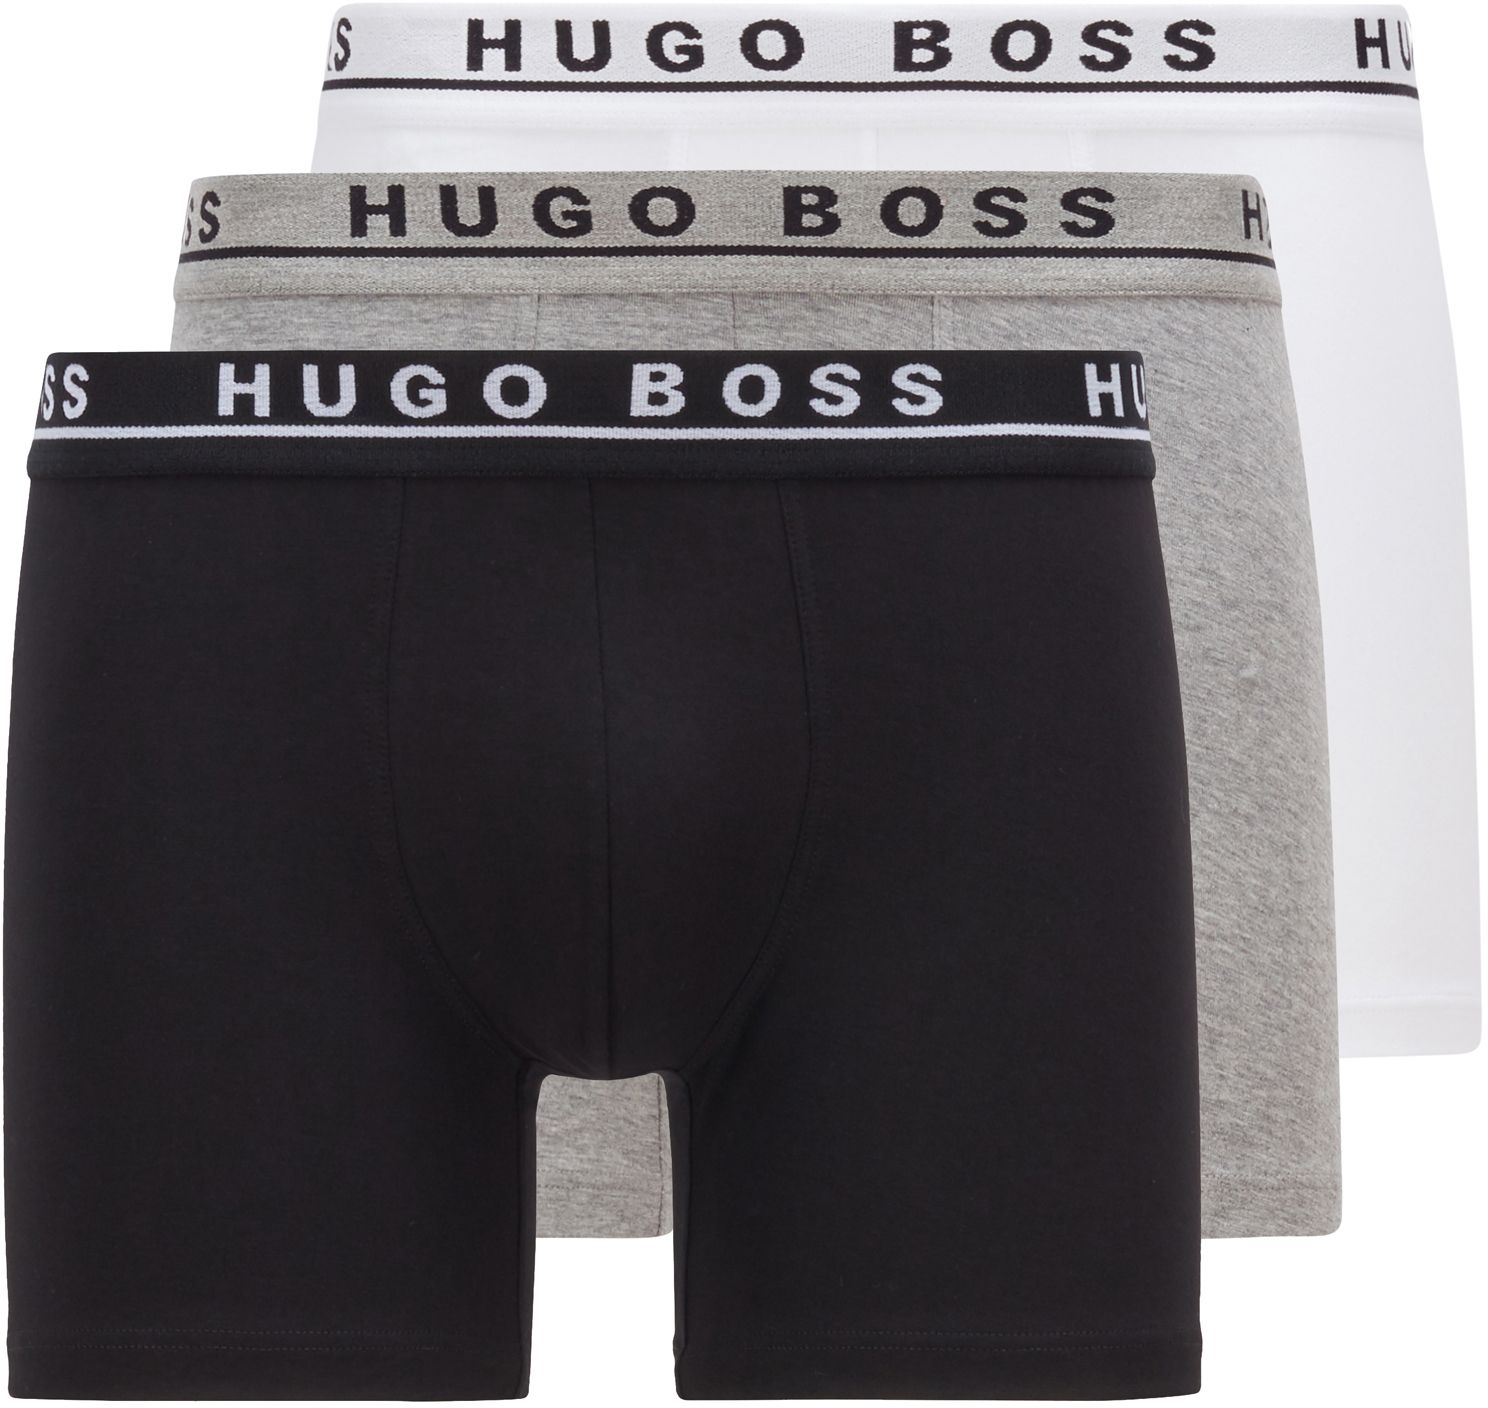 Hugo Boss Boxer Shorts Brief 3-Pack Multicolour White Grey Black size L